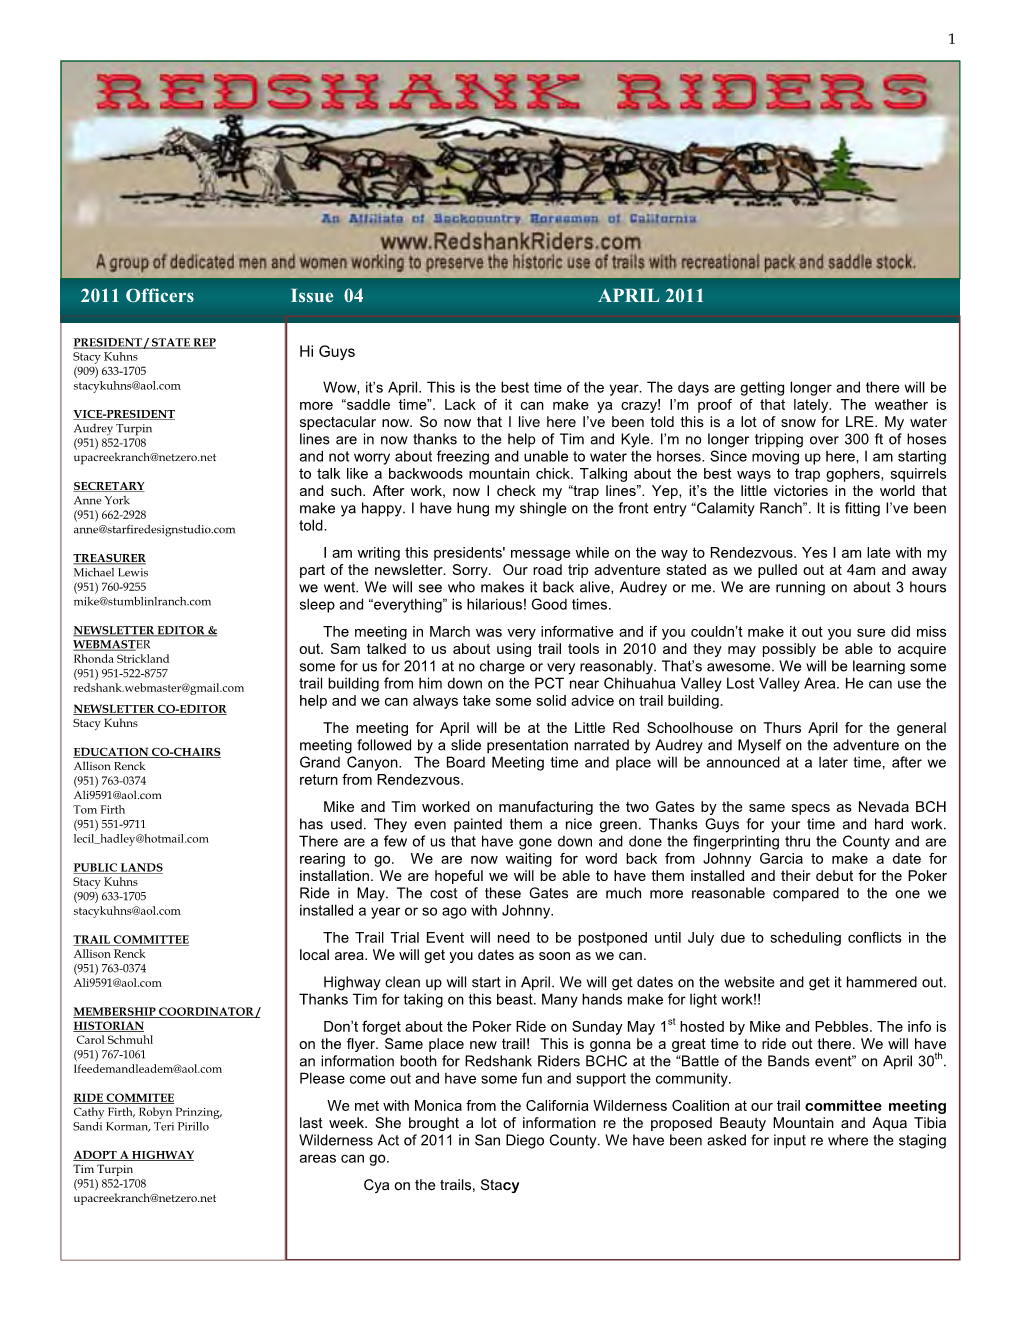 April Newsletter ~ Redshank Riders